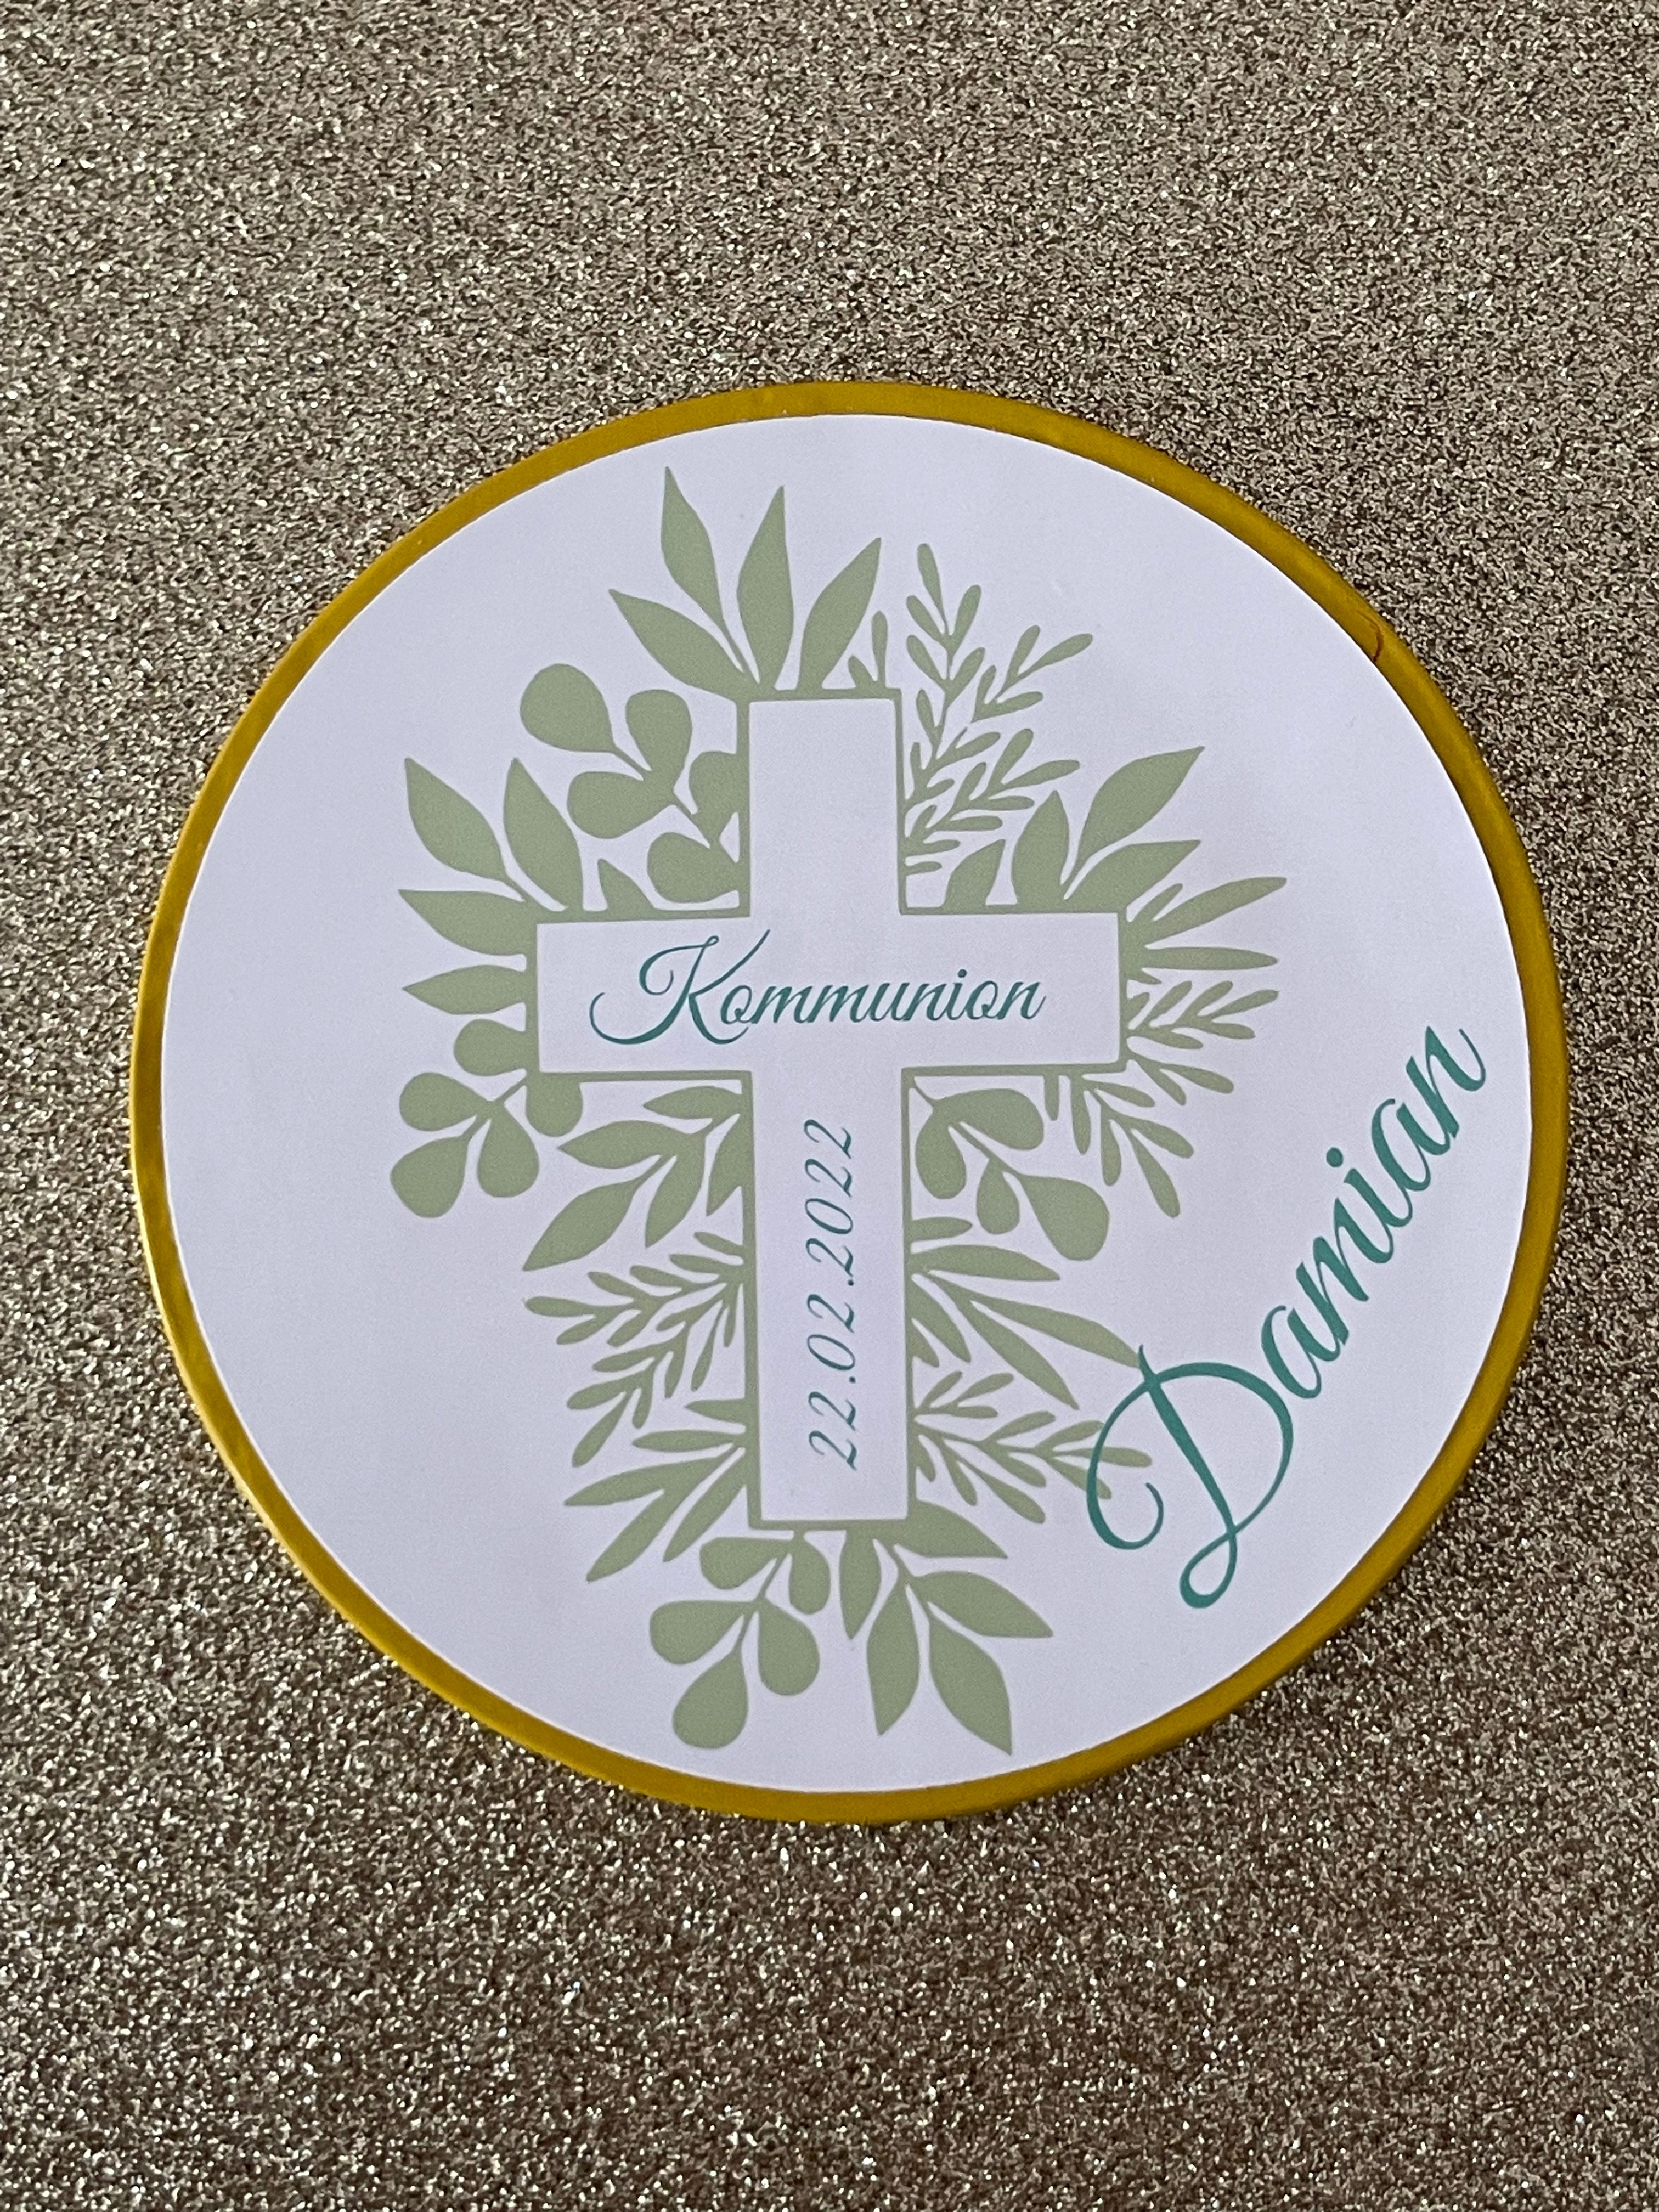 Schokotaler personalisiert Taufe Konfirmation Firmung Kommunion verschiedene Motive